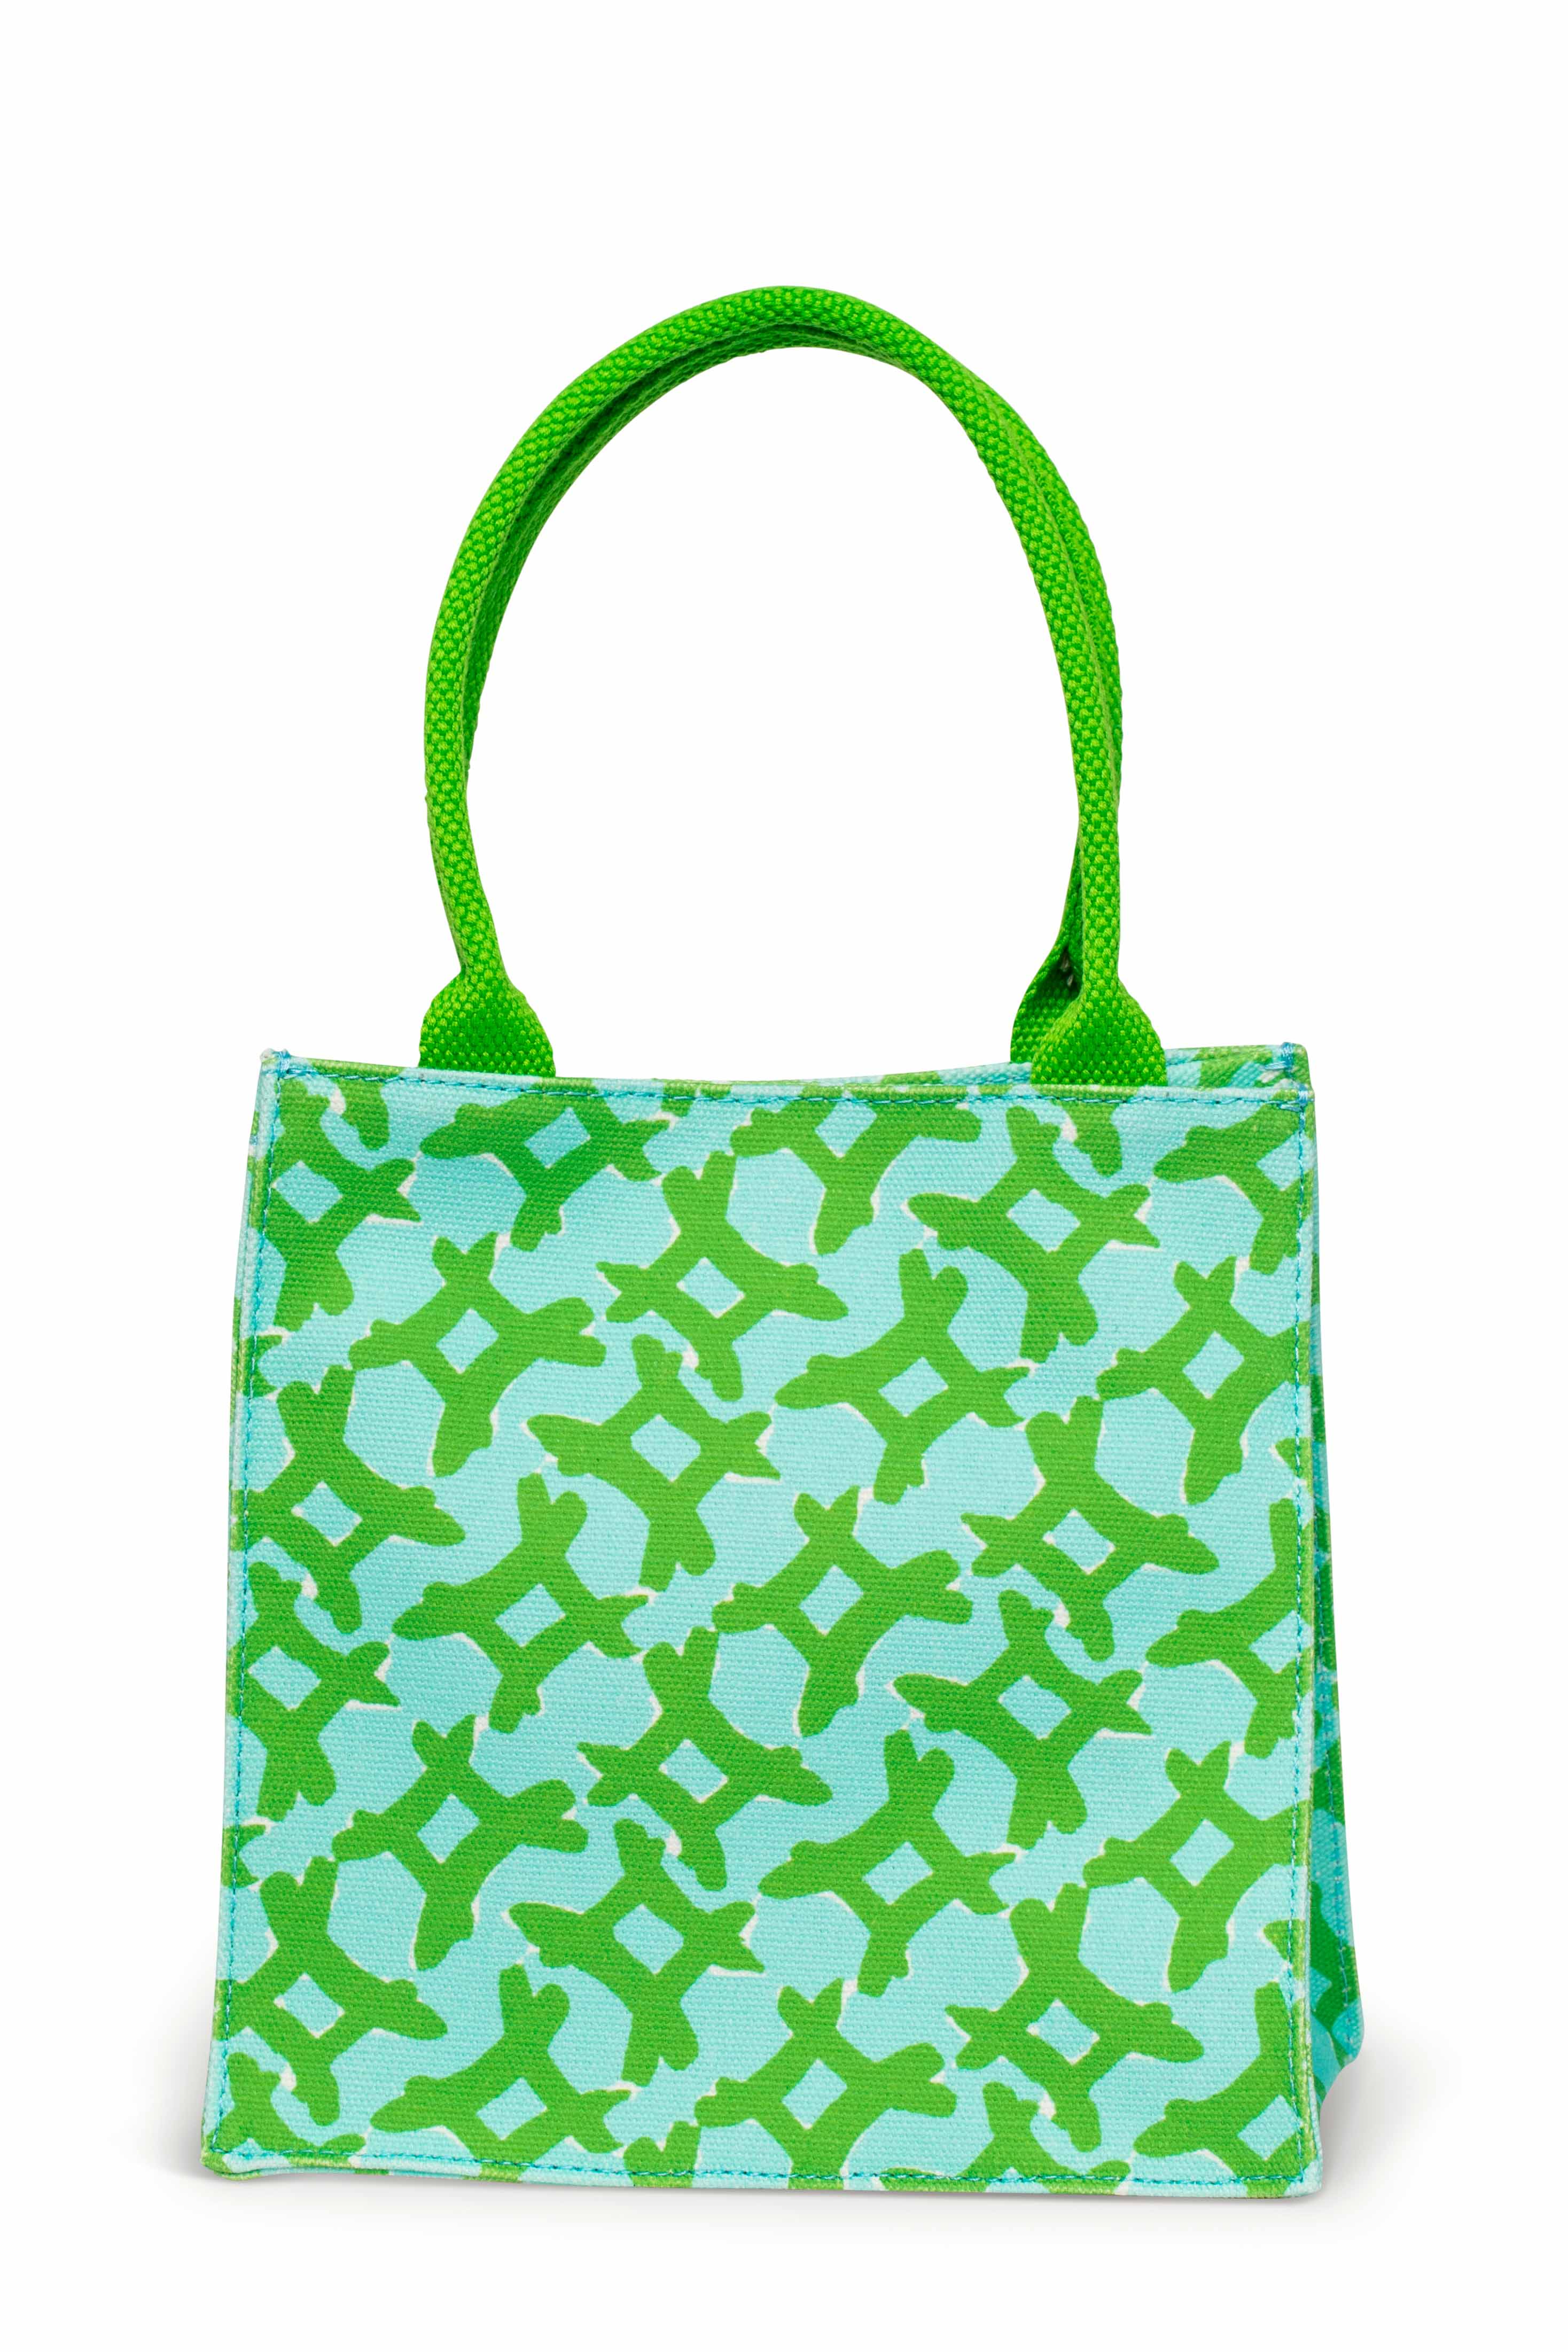 Itsy Canvas Bag English Garden Green Handbag jeanpierreklifa.com   